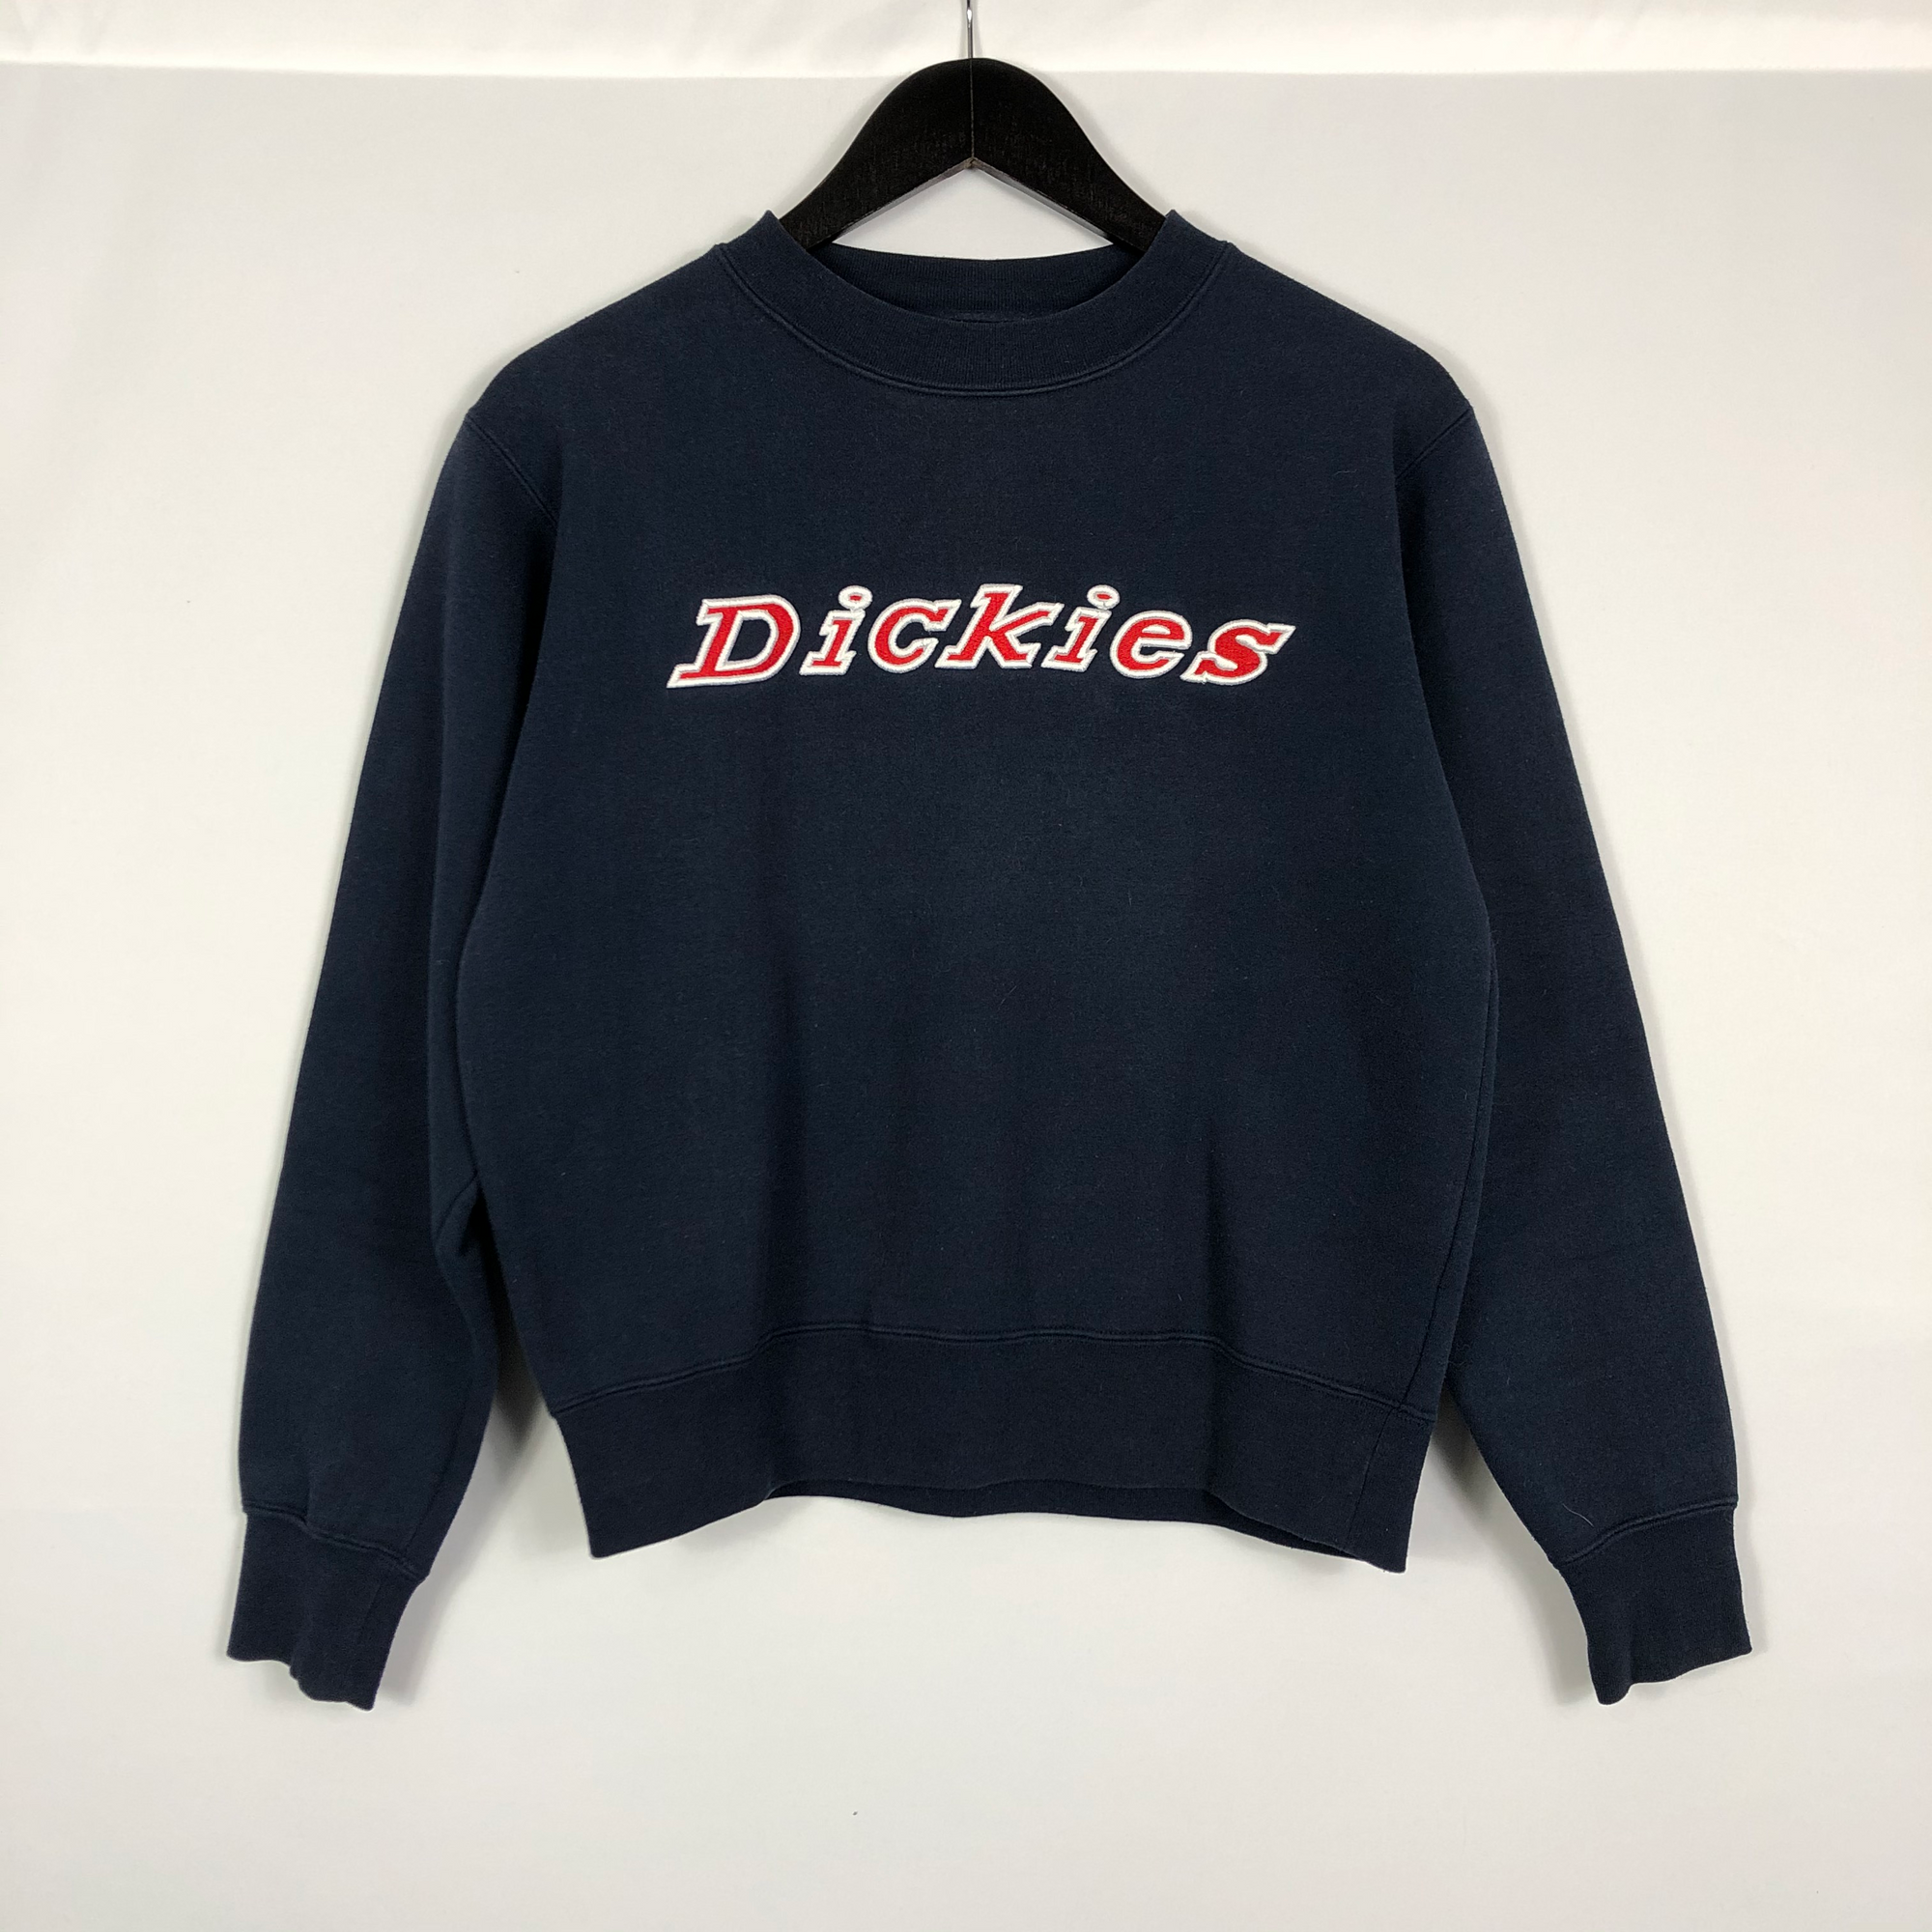 Vintage Dickies Spellout Sweatshirt in Navy - Women's Small